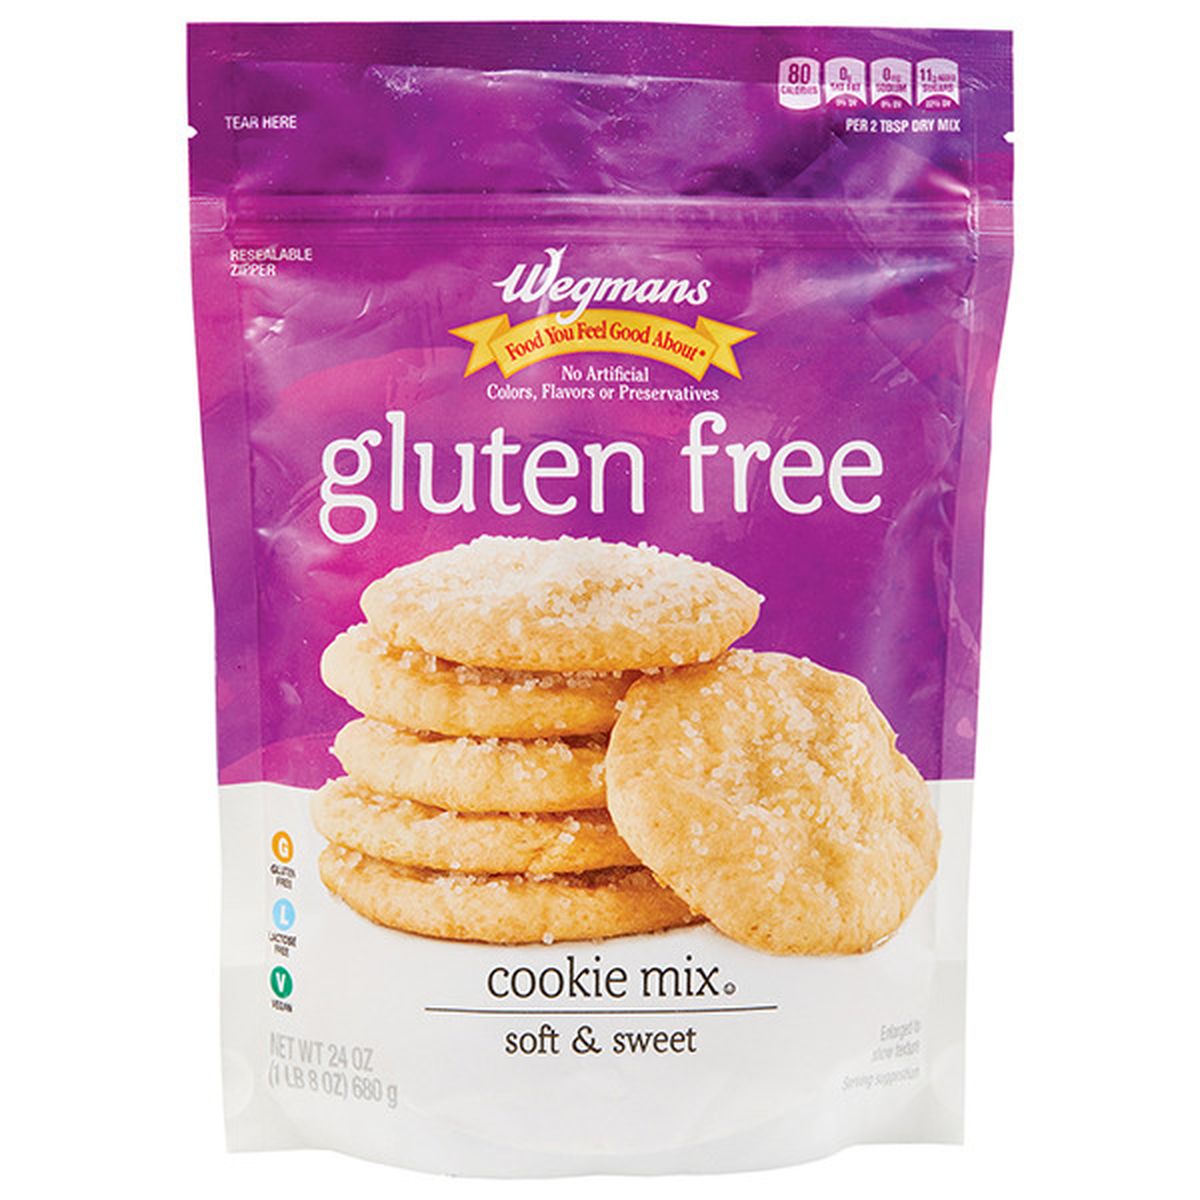 Calories in Wegmans Gluten Free Cookie Mix